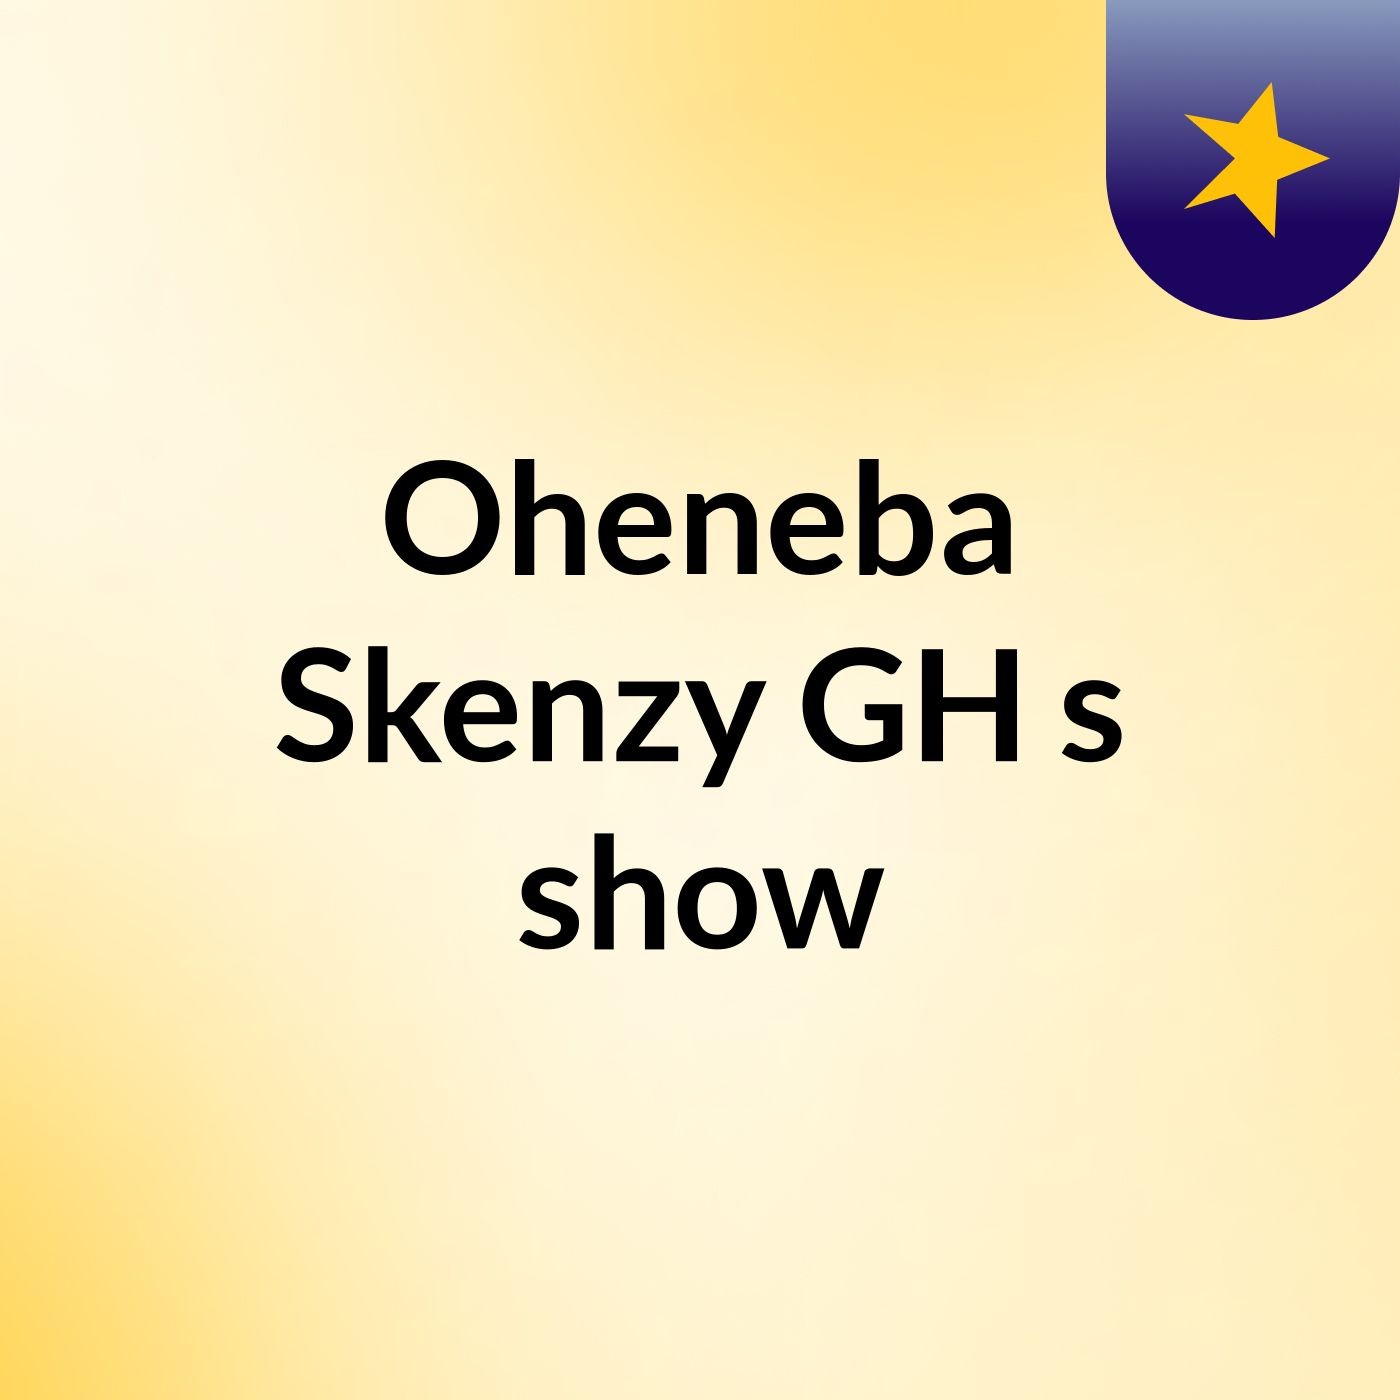 Episode 3 - Oheneba Skenzy GH's show